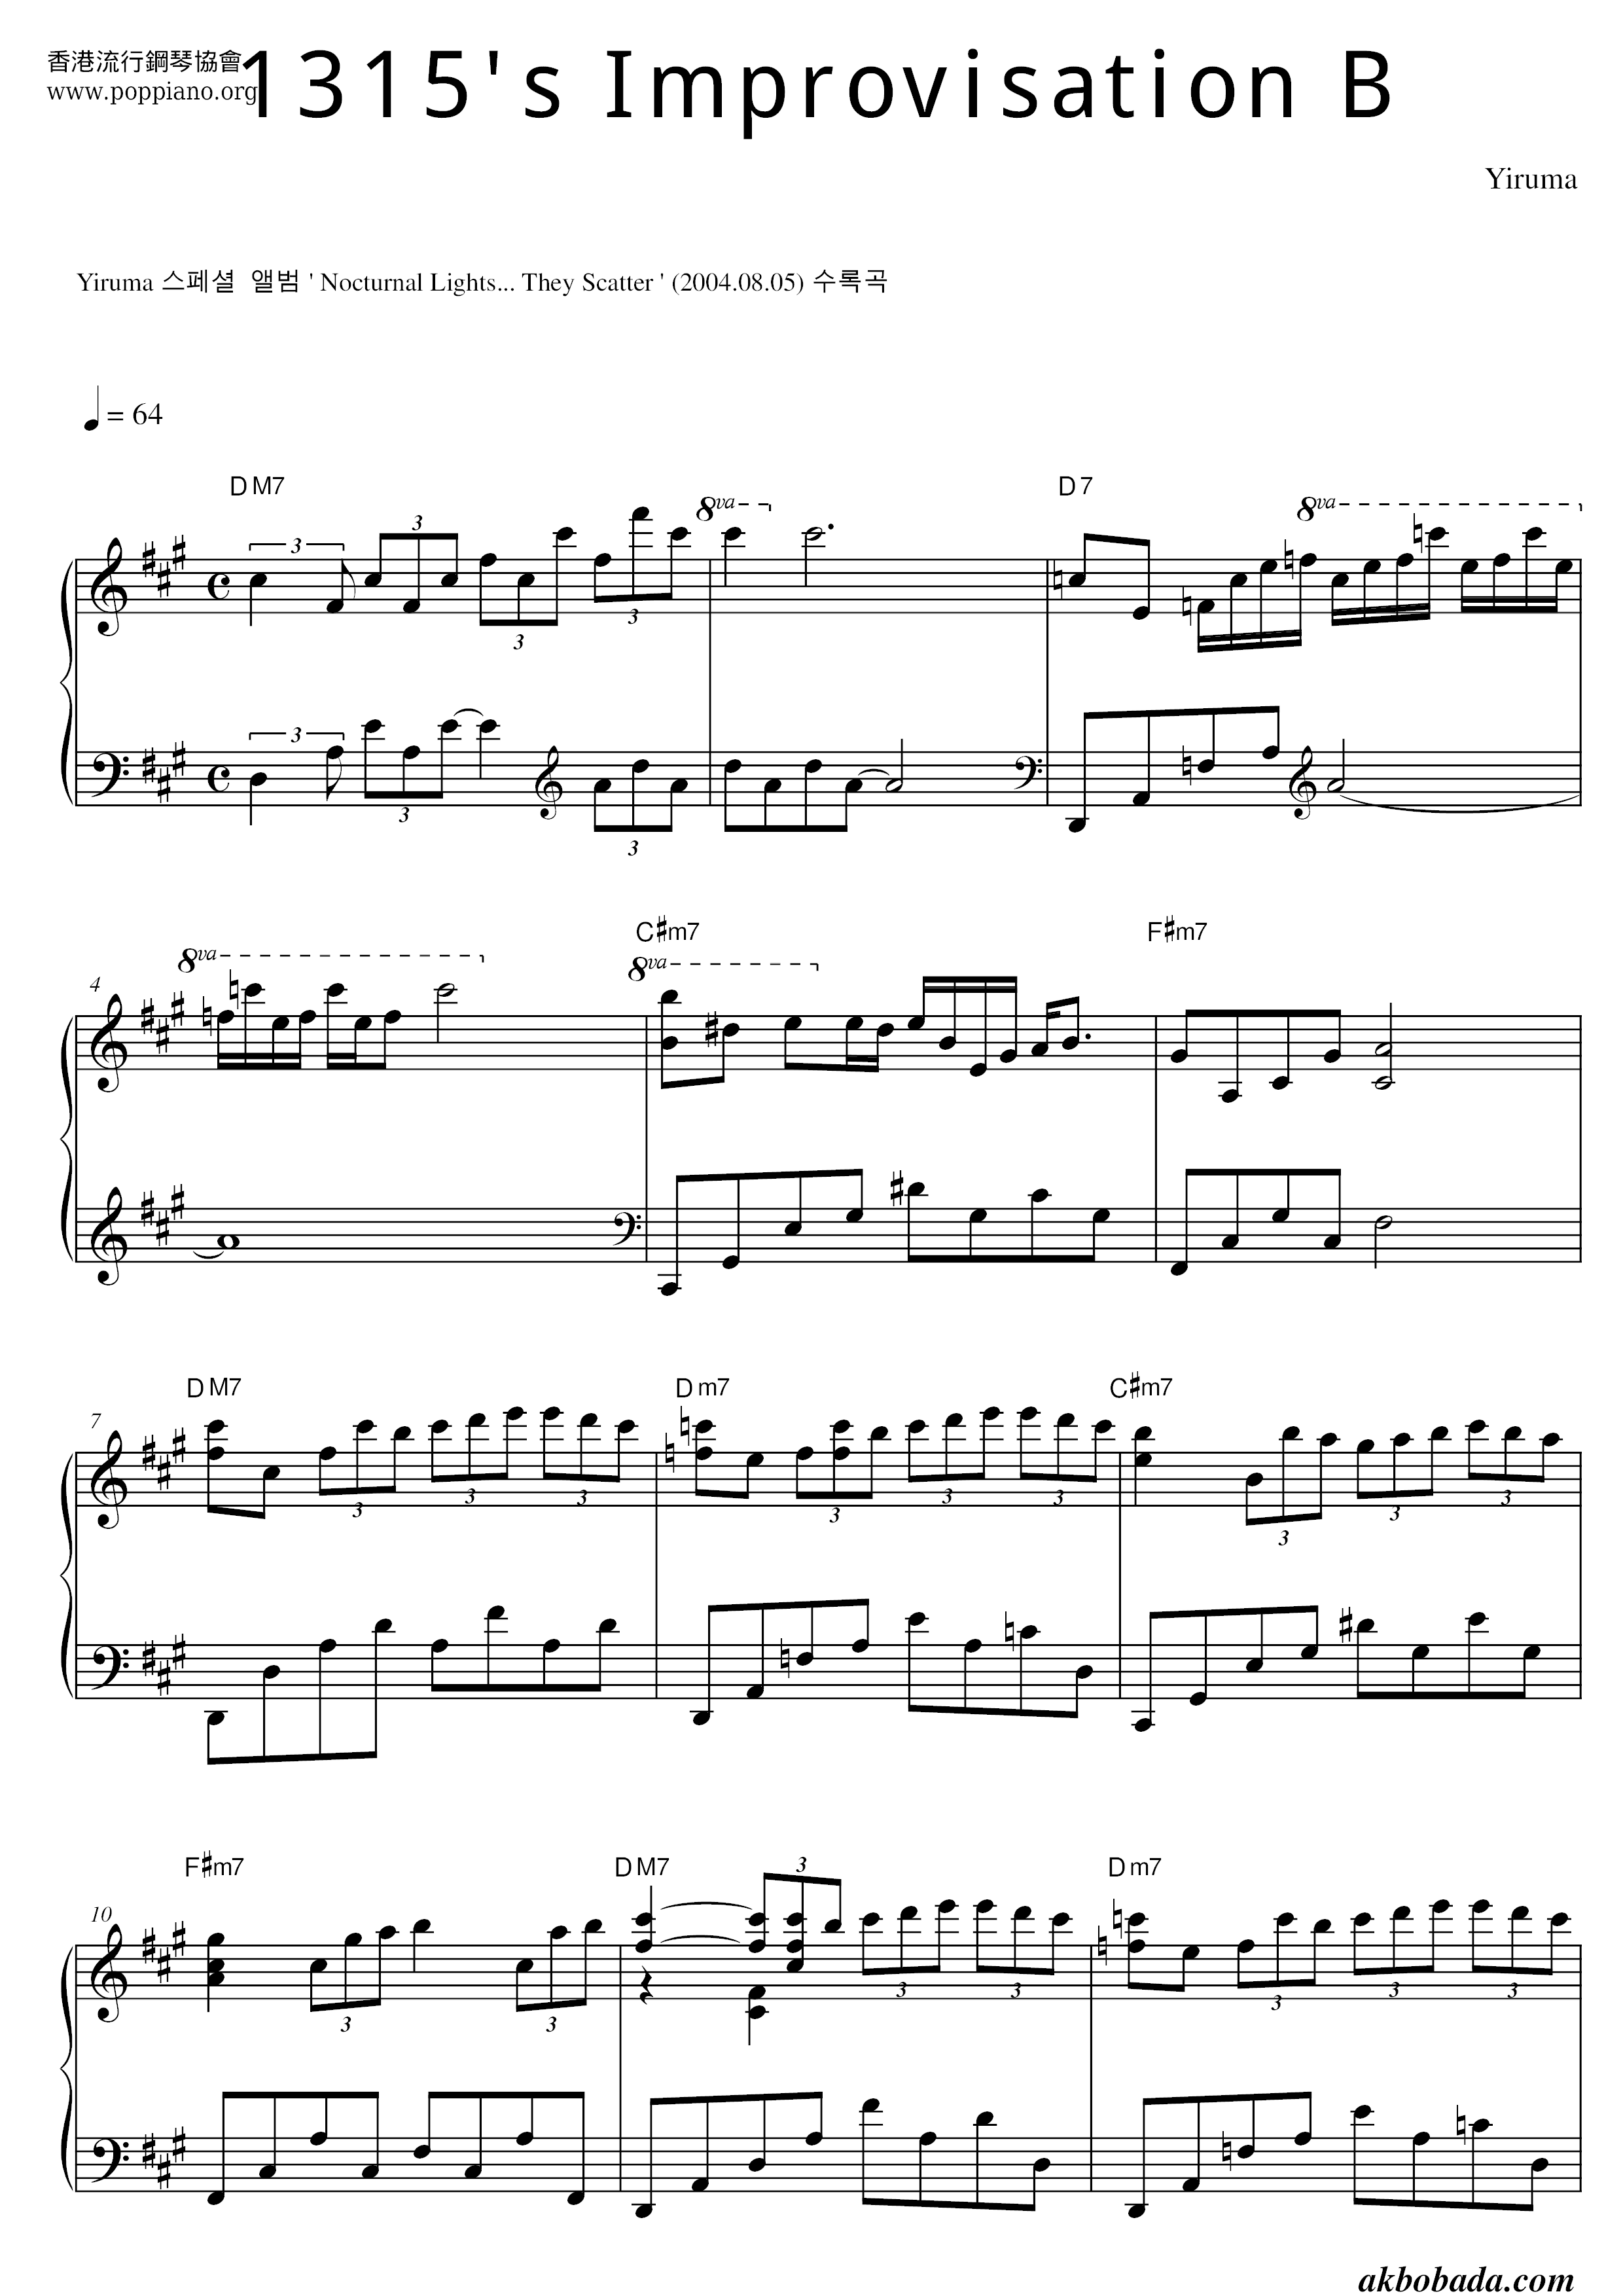 1315's Improvisation B Score